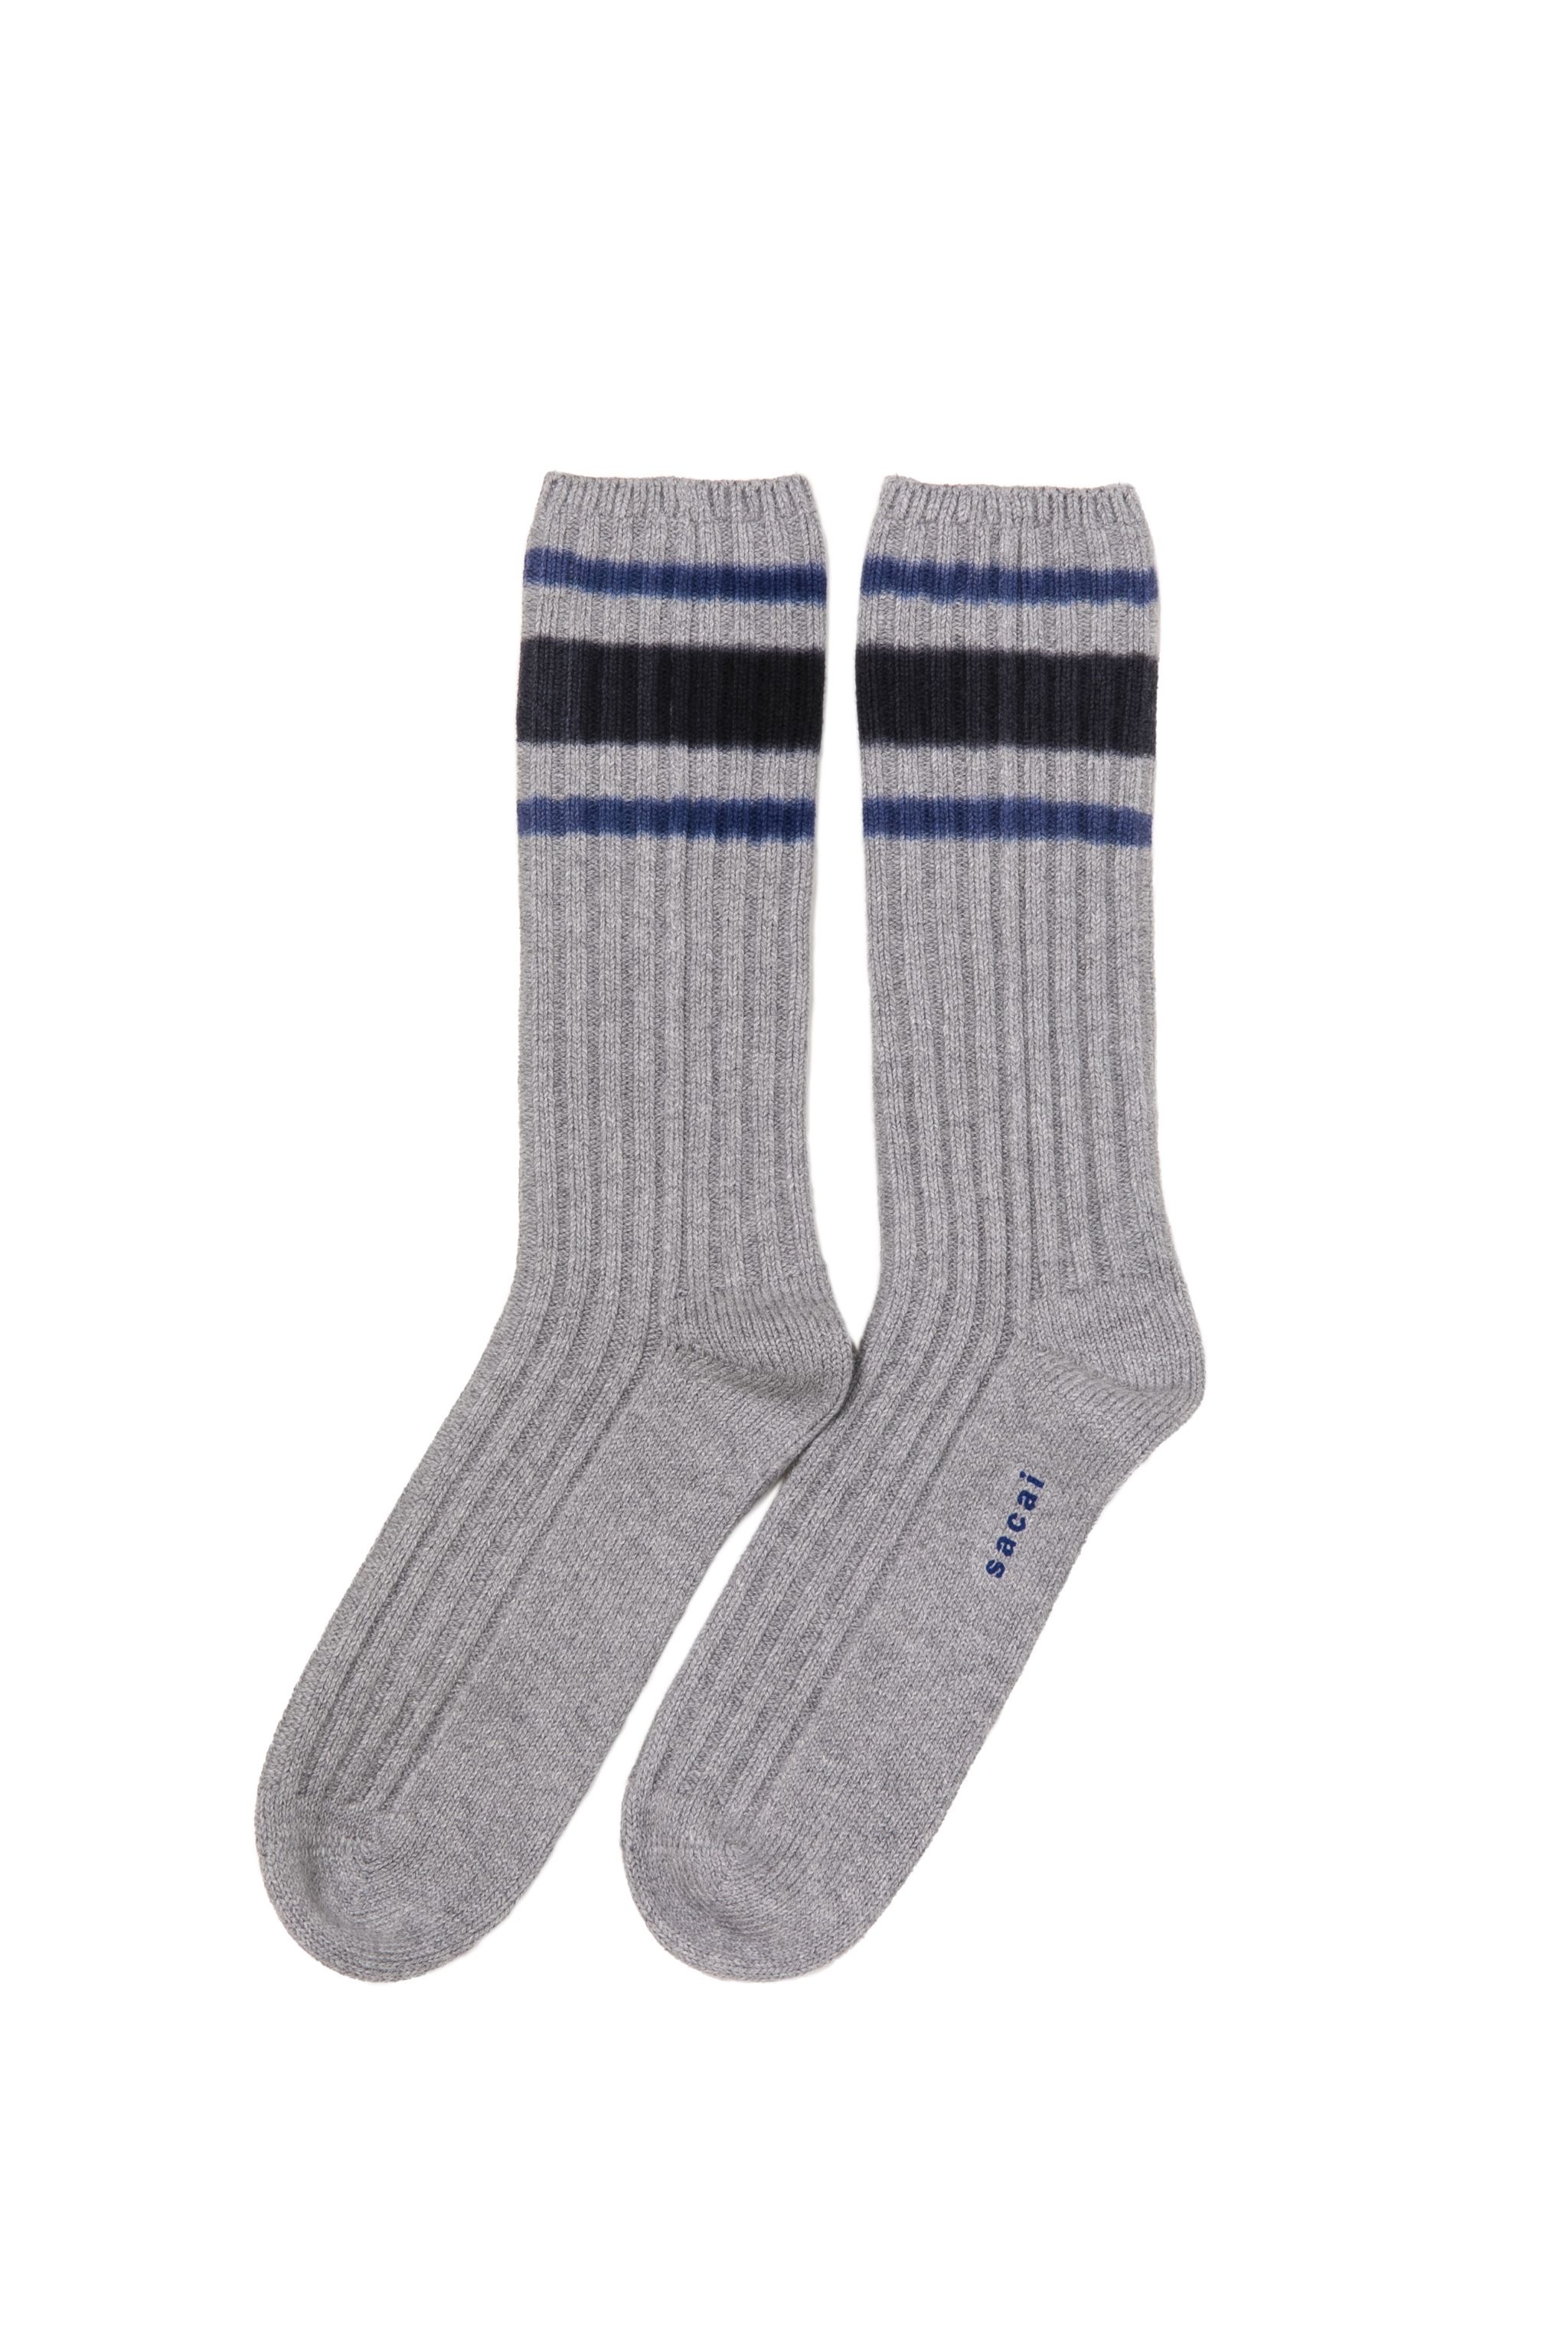 Line Dye Socks - 1